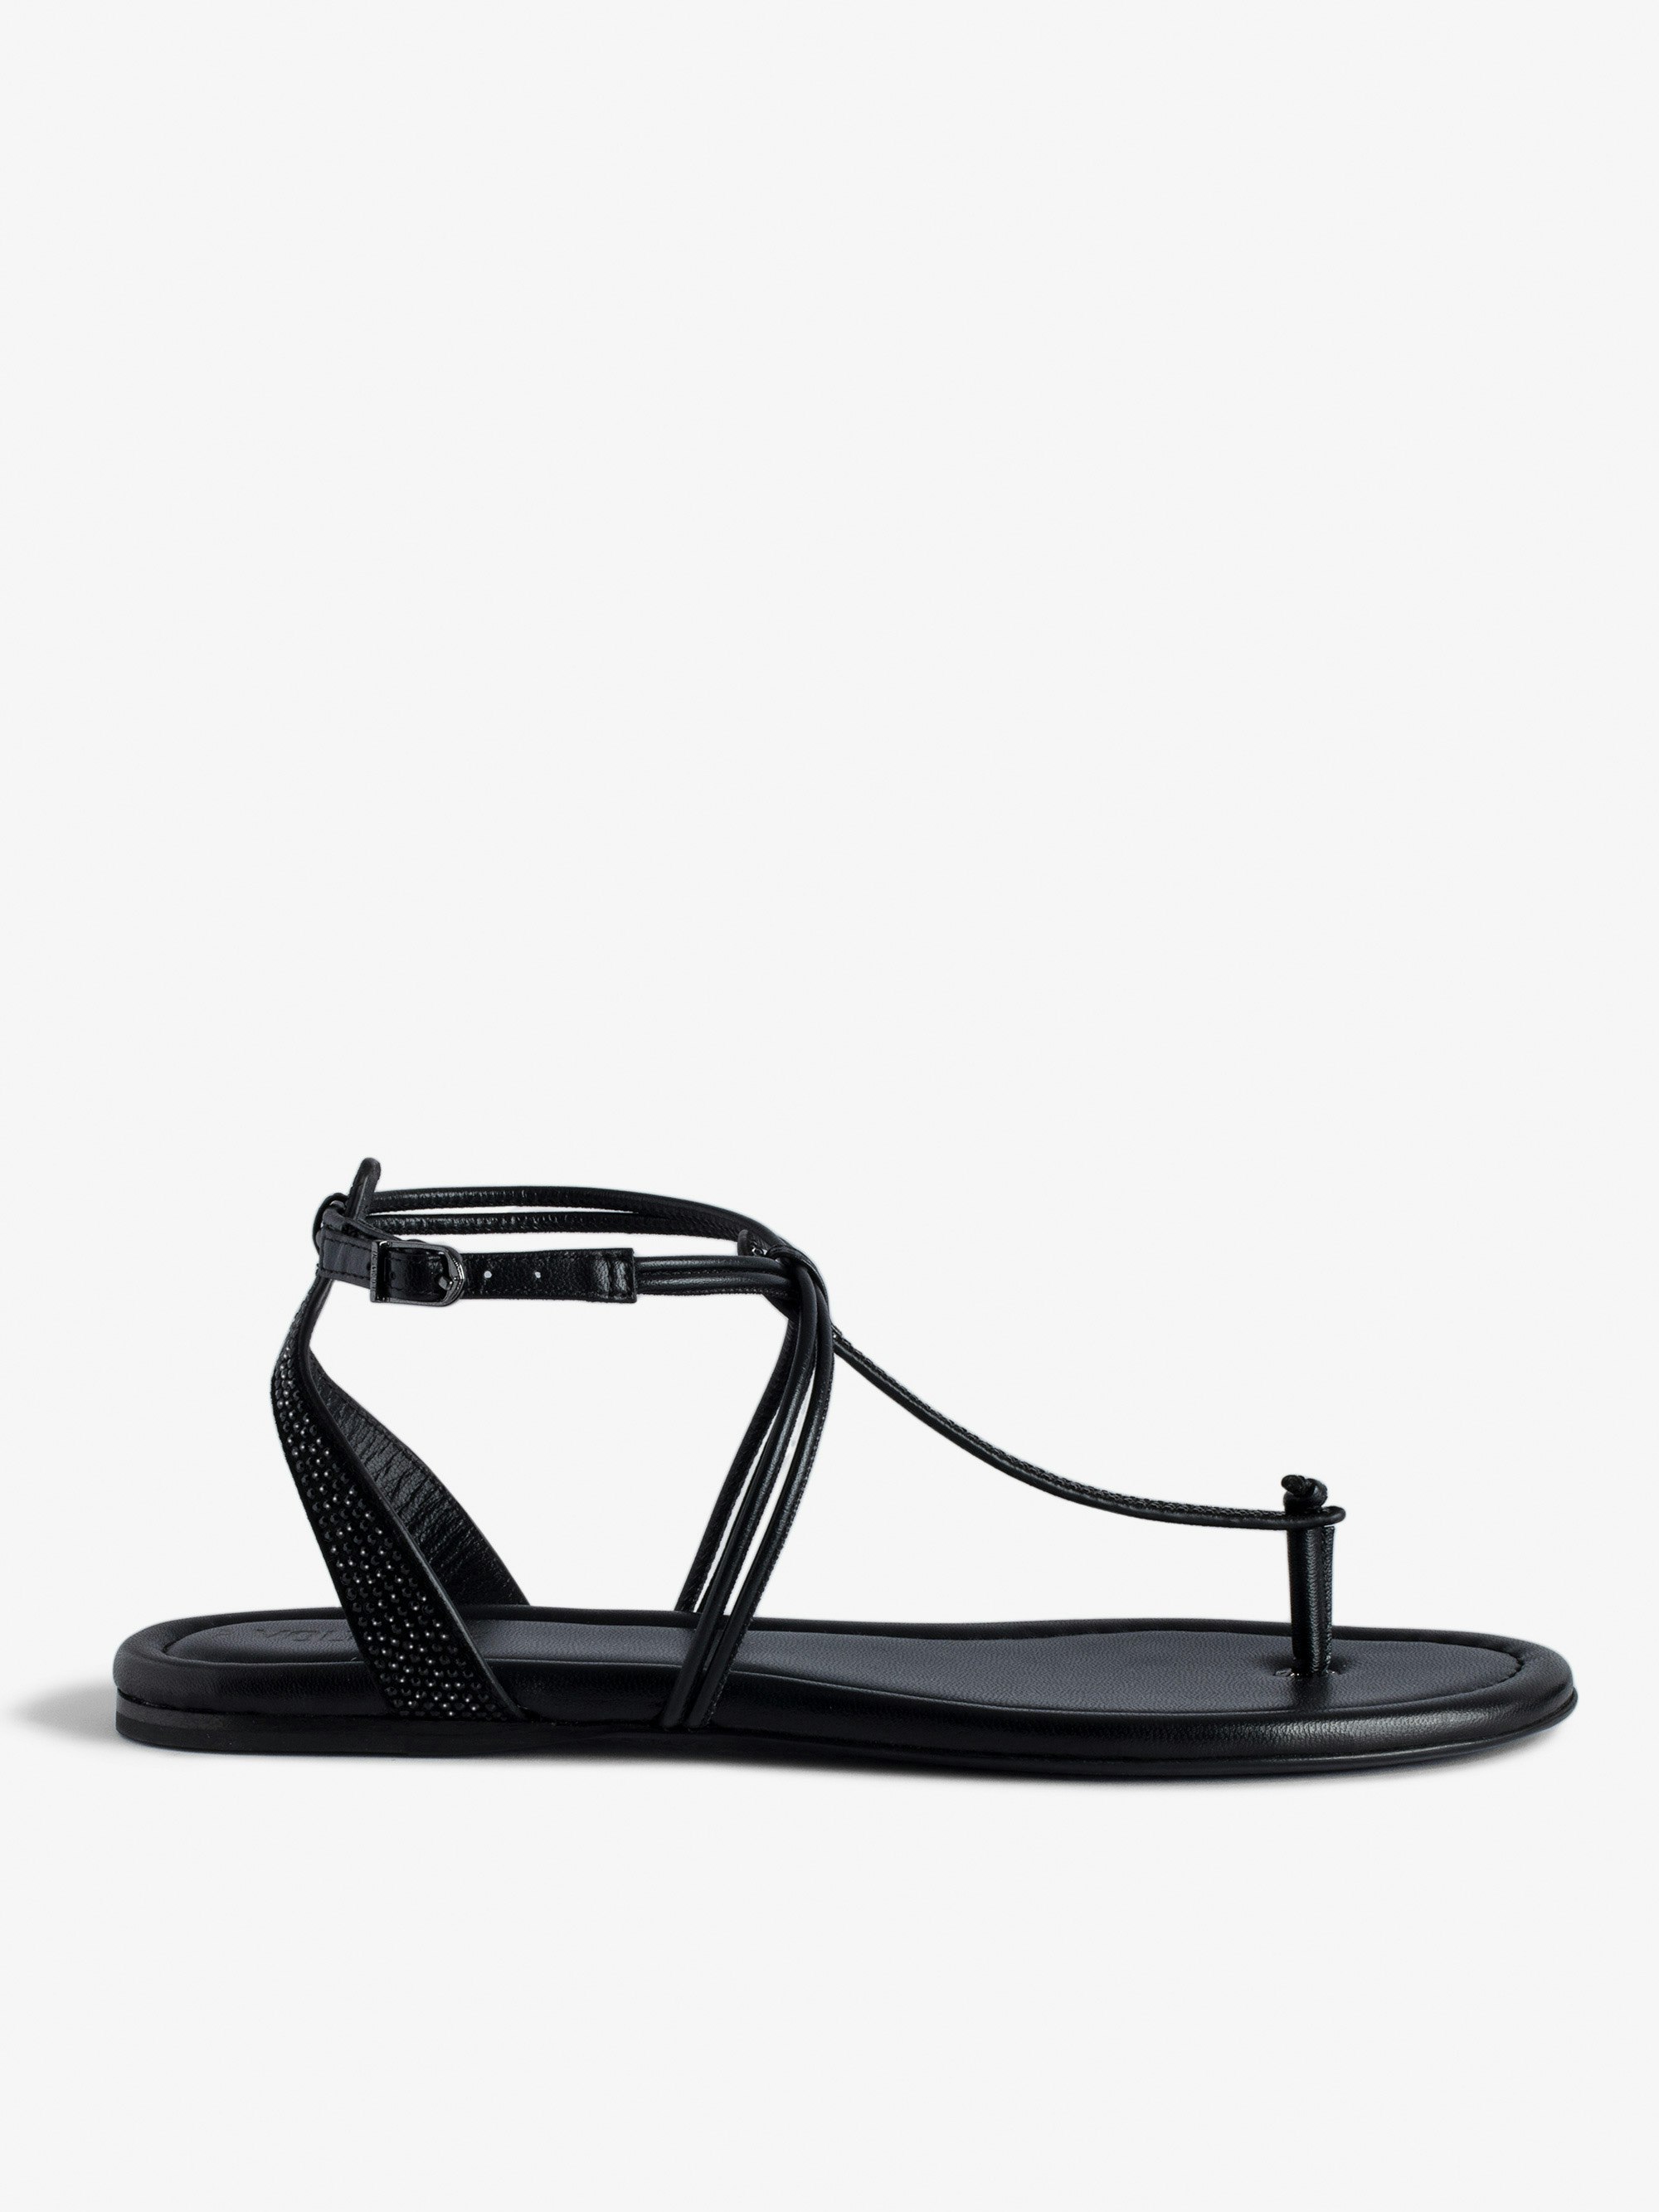 Moonstar Suede Sandals - Black suede sandals with adjustable buckle and straps with Swarovski® rhinestone.